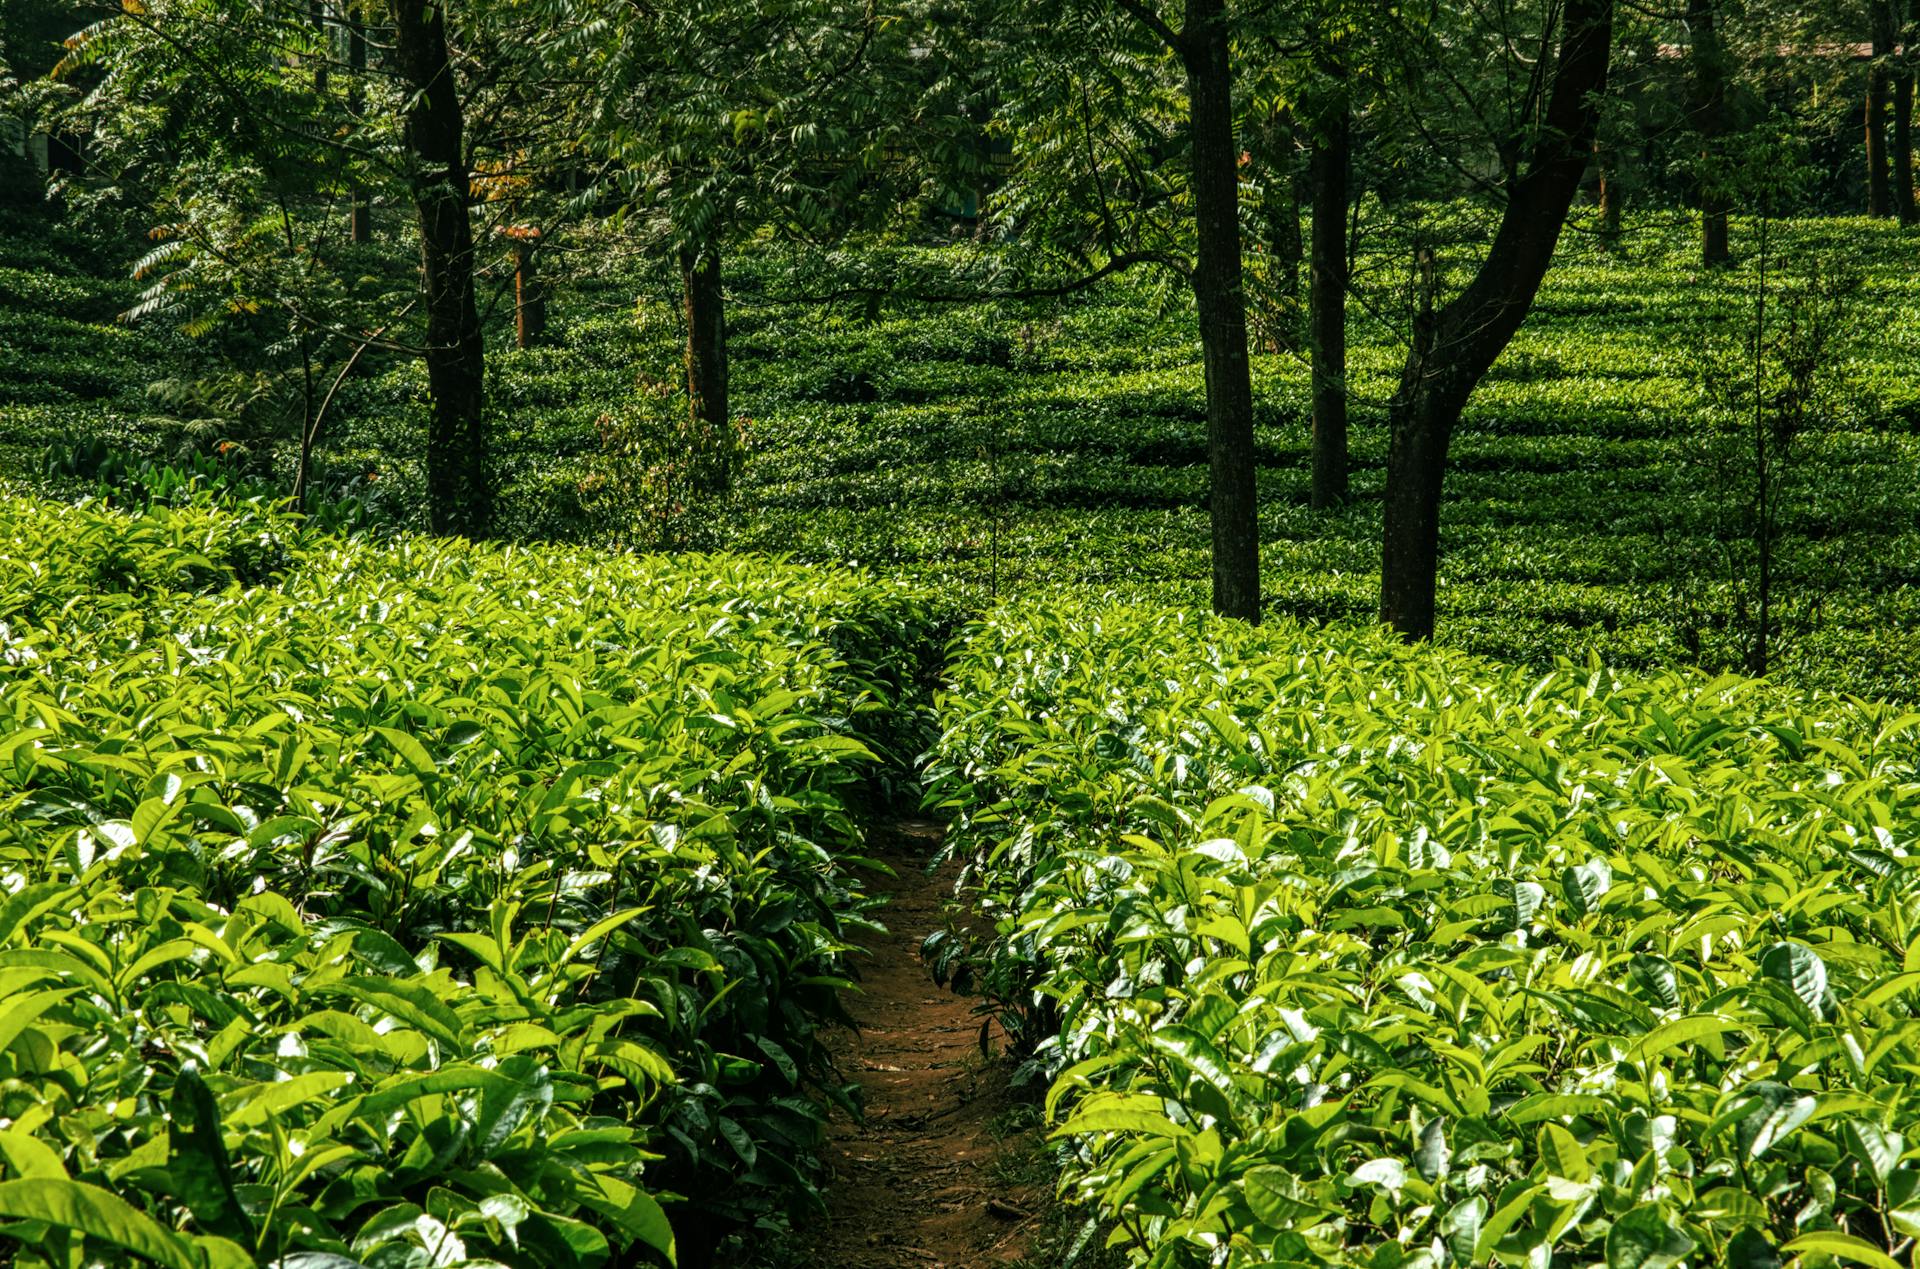 Kenya Tea Growing